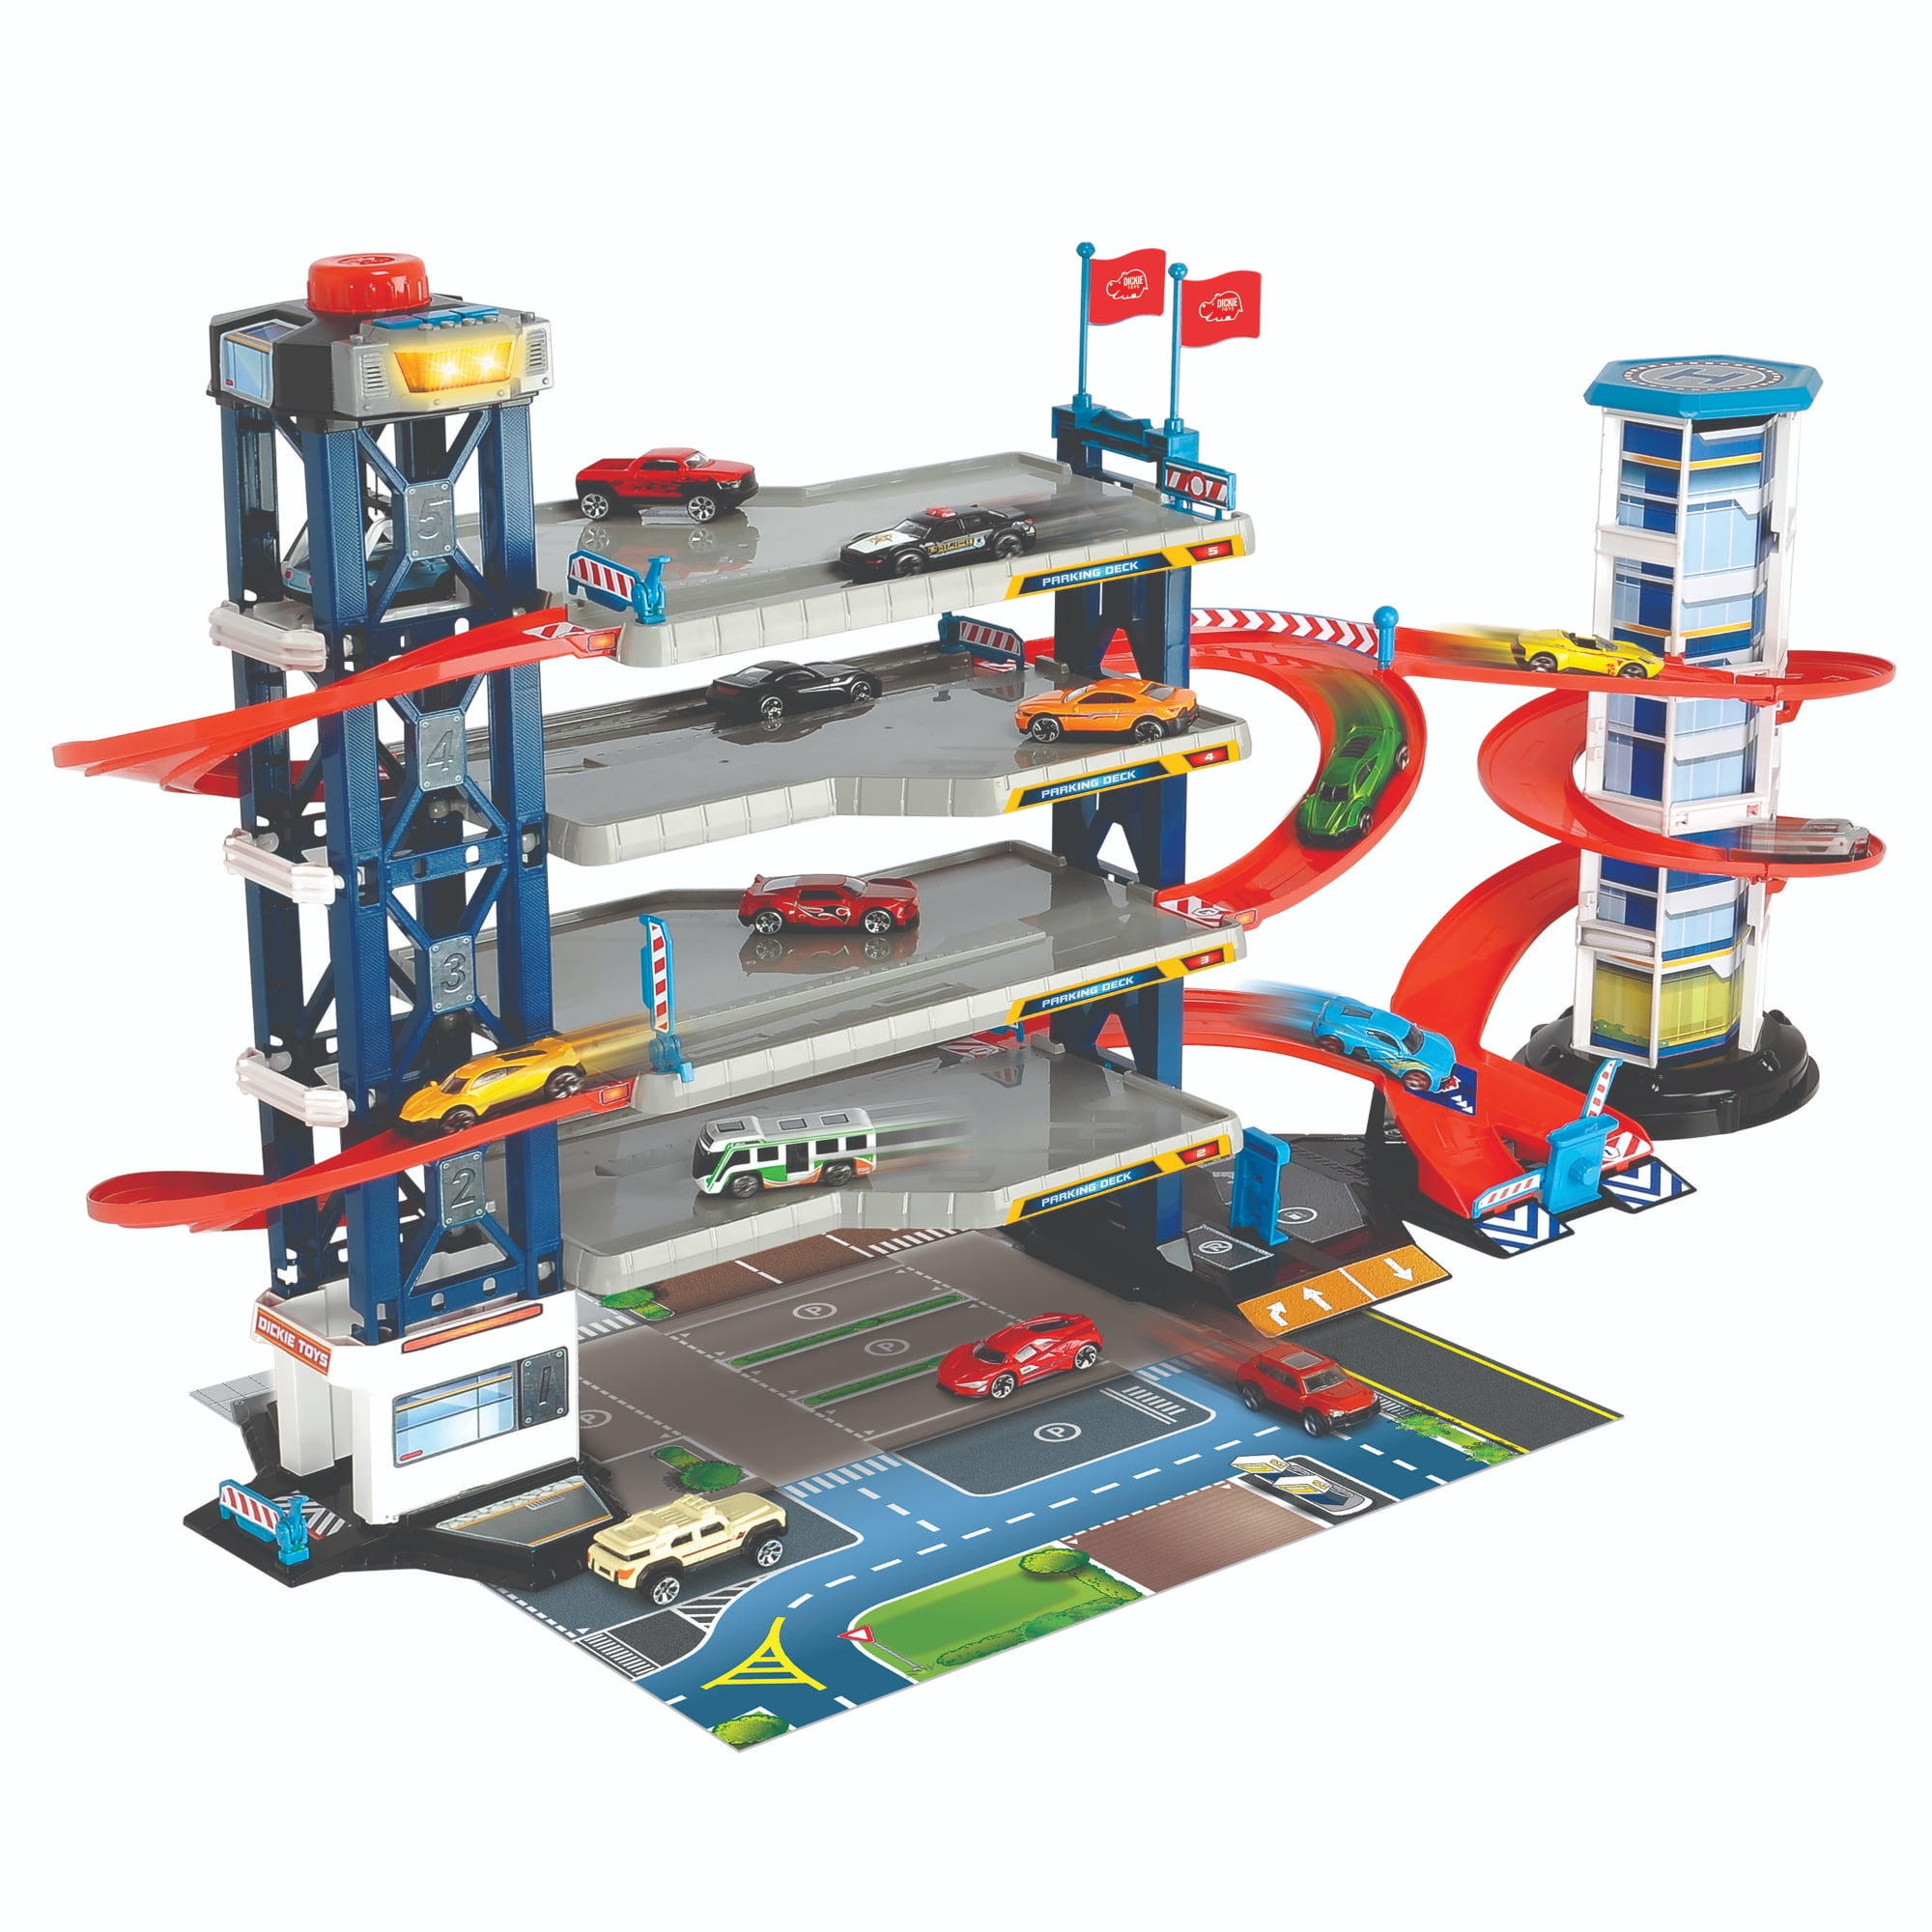 Vehicles Helicopter Model Toy For Children Car Garage Parking Construction Set 